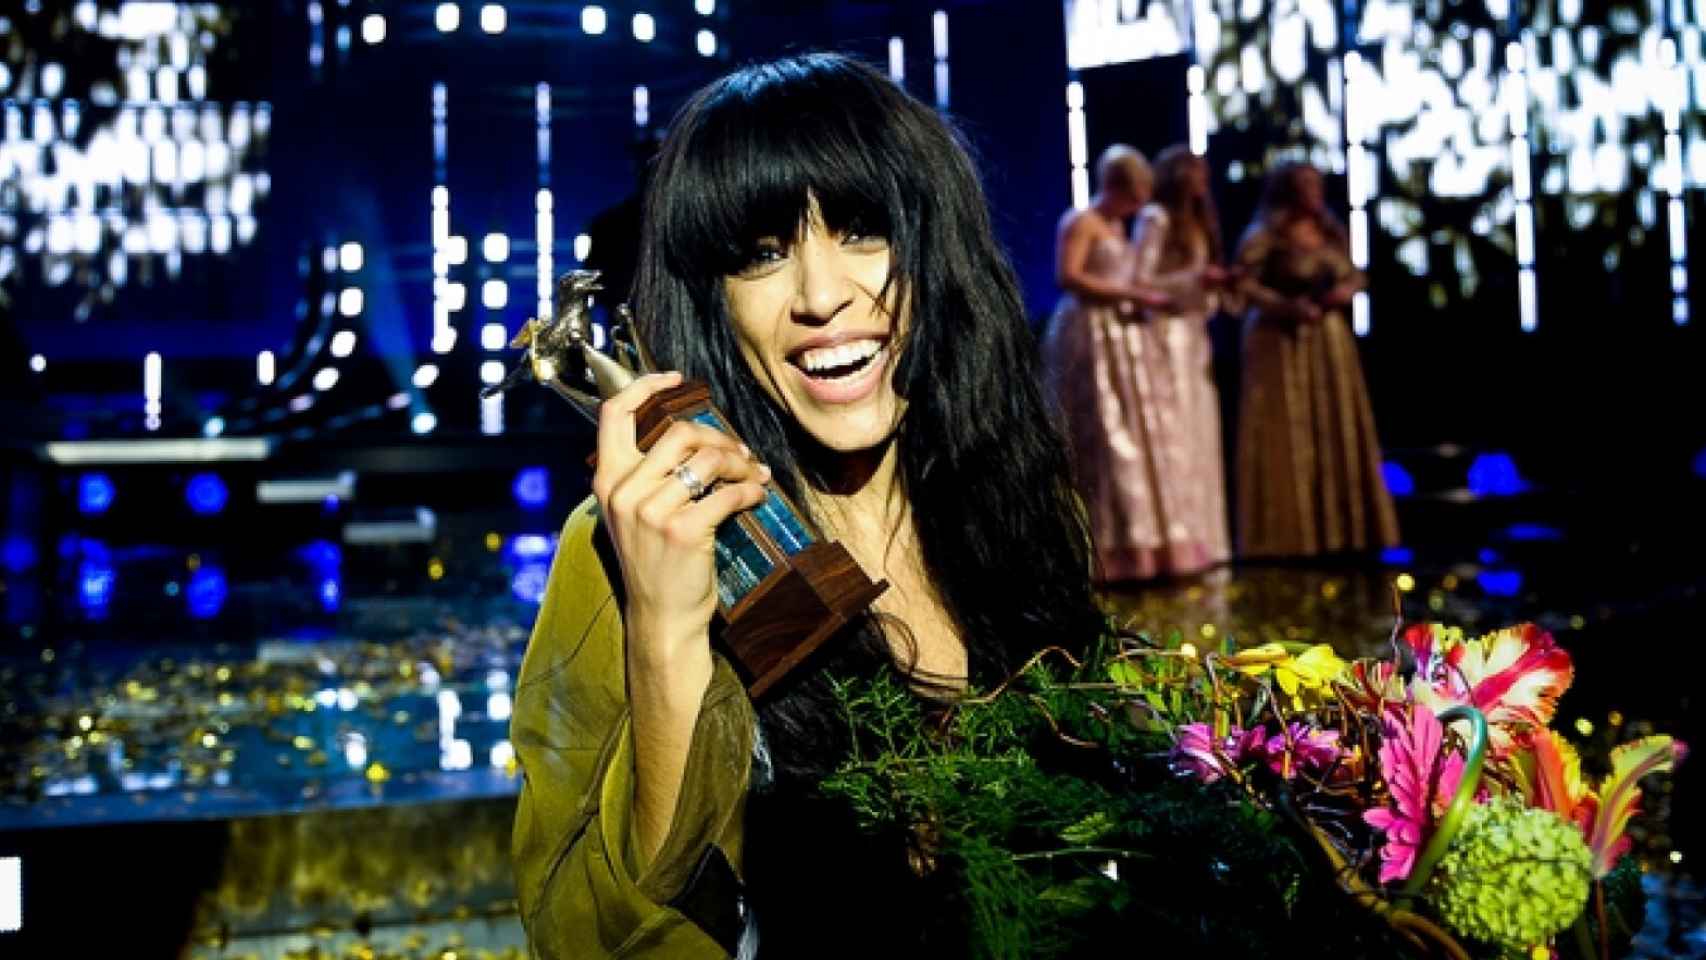 Loreen tras proclamarse ganadora del Melodifestivalen 2012.